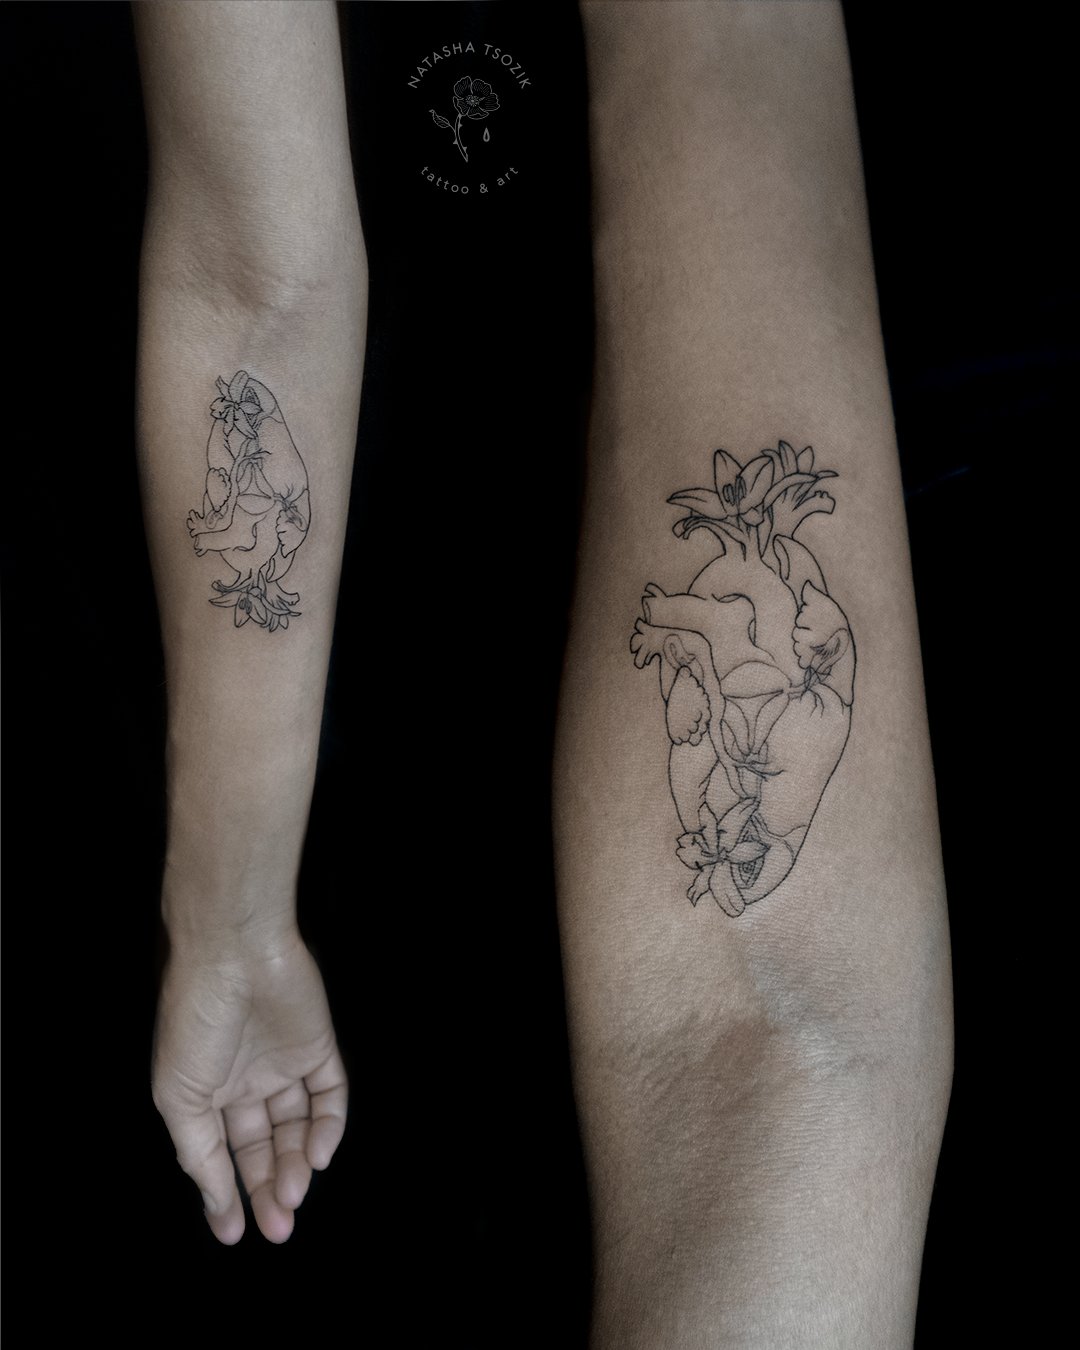 Vulva Heart Fine Line tattoo on forearm by Natasha Tsozik